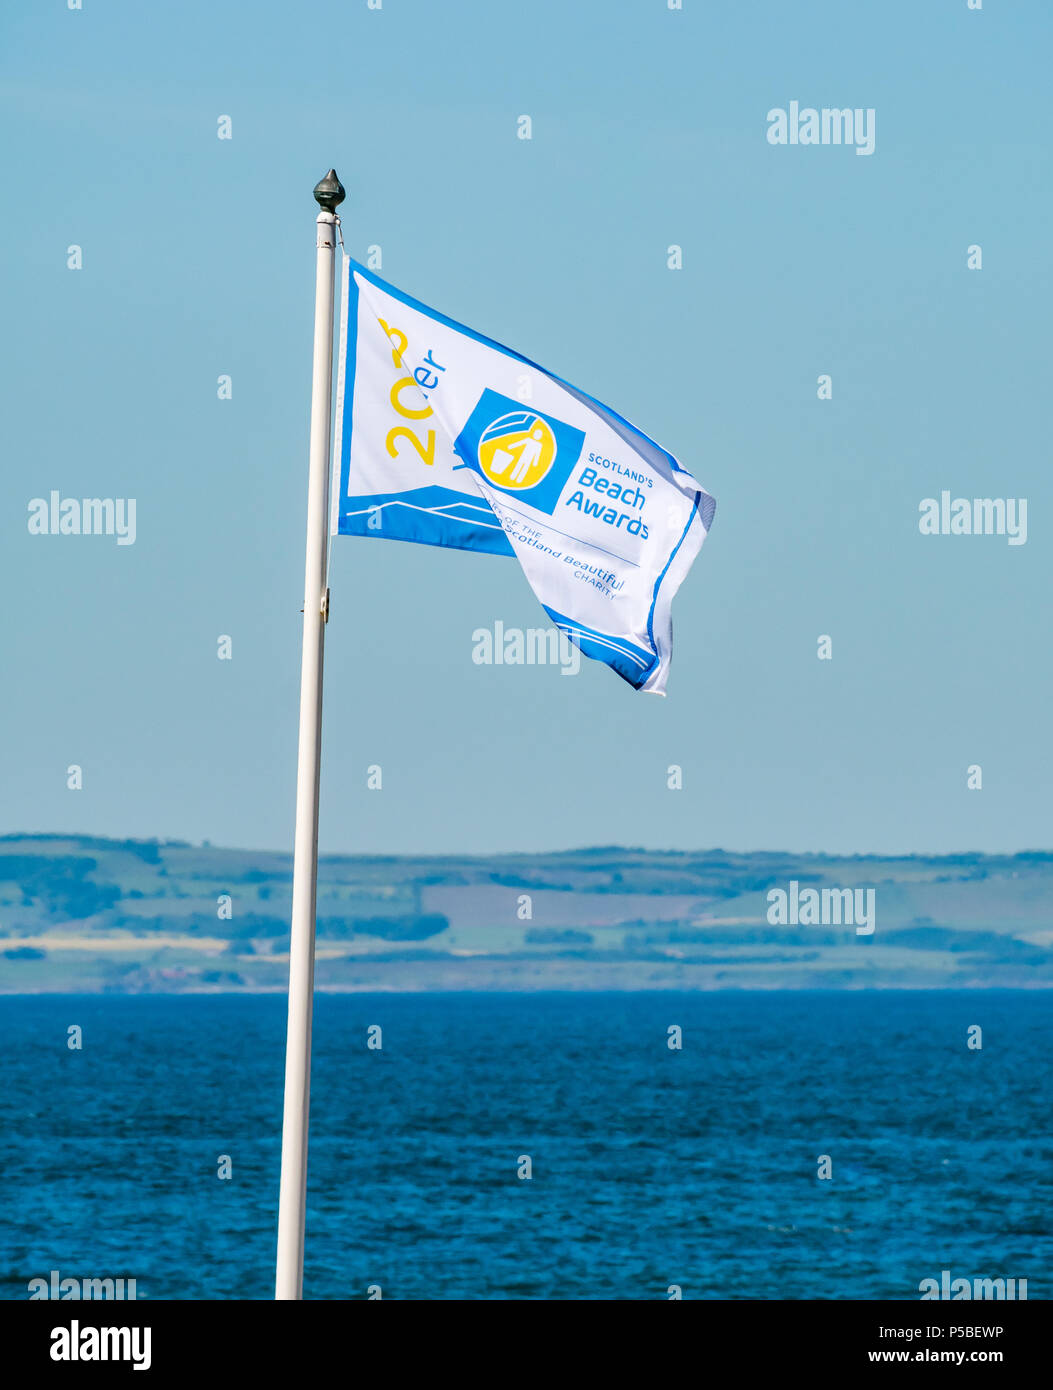 Scotland's Clean Beach Award flag flying, North Berwick, East Lothian, Scotland, UK on Summer day with blue sky Stock Photo